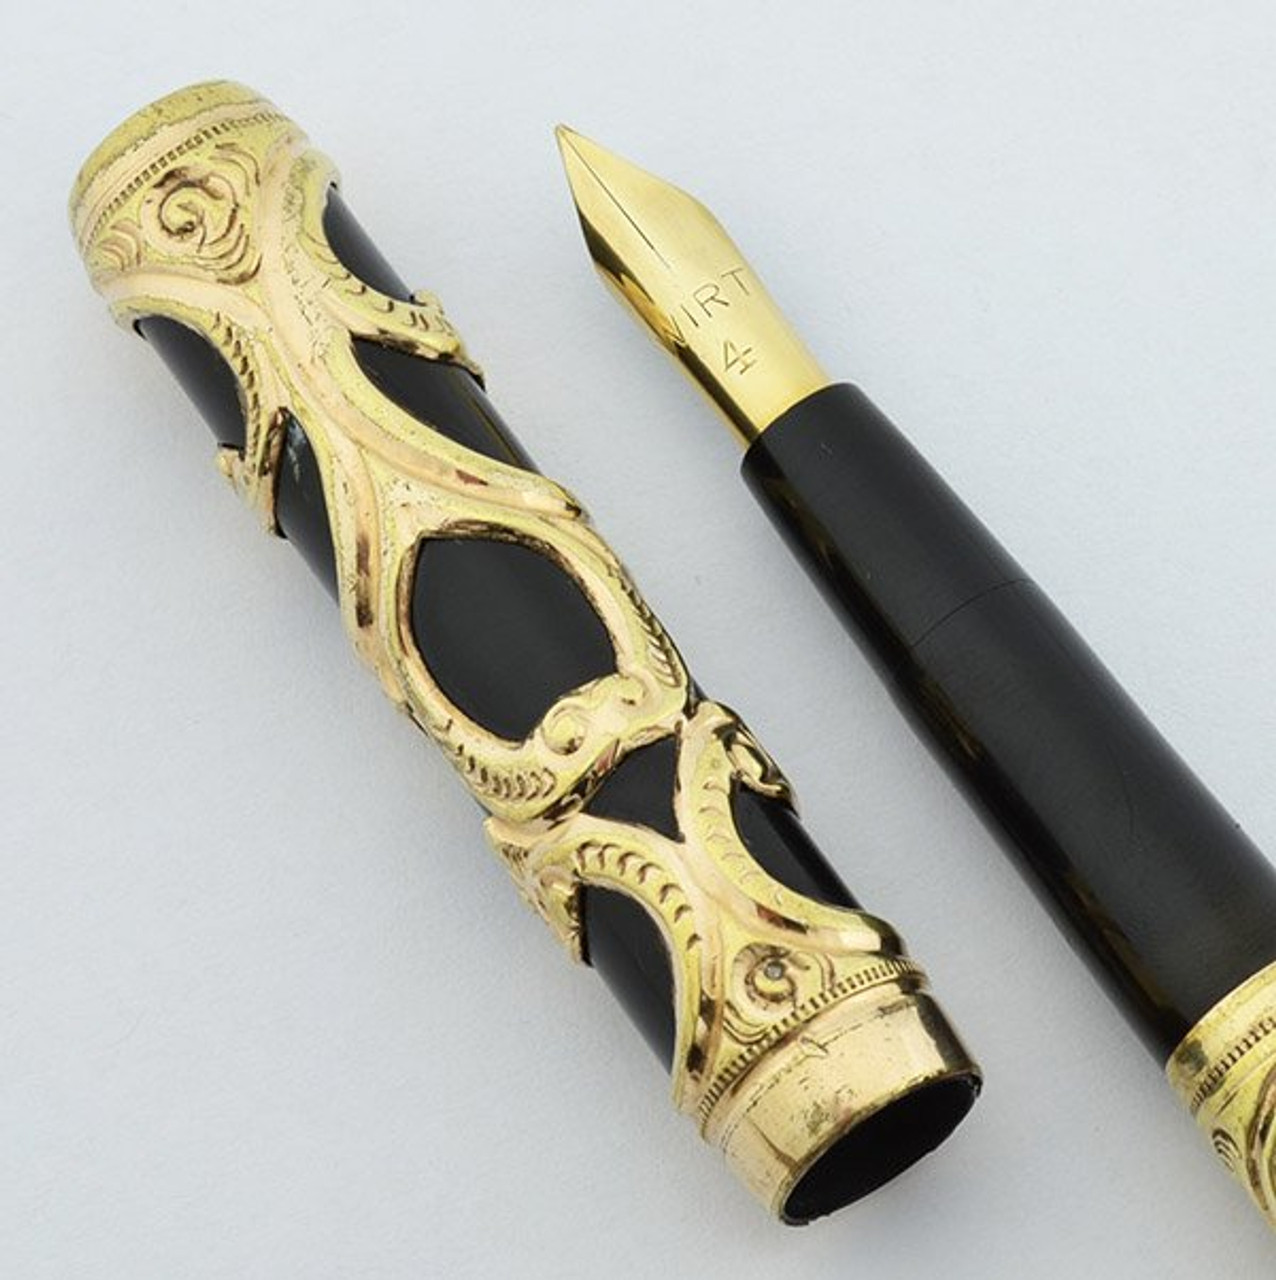 Paul E. Wirt Overlay Fountain Pen - Gold Filled, #4 Full Flex Wirt Nib, Underfeed, Eye Dropper (Very Nice, Tested)